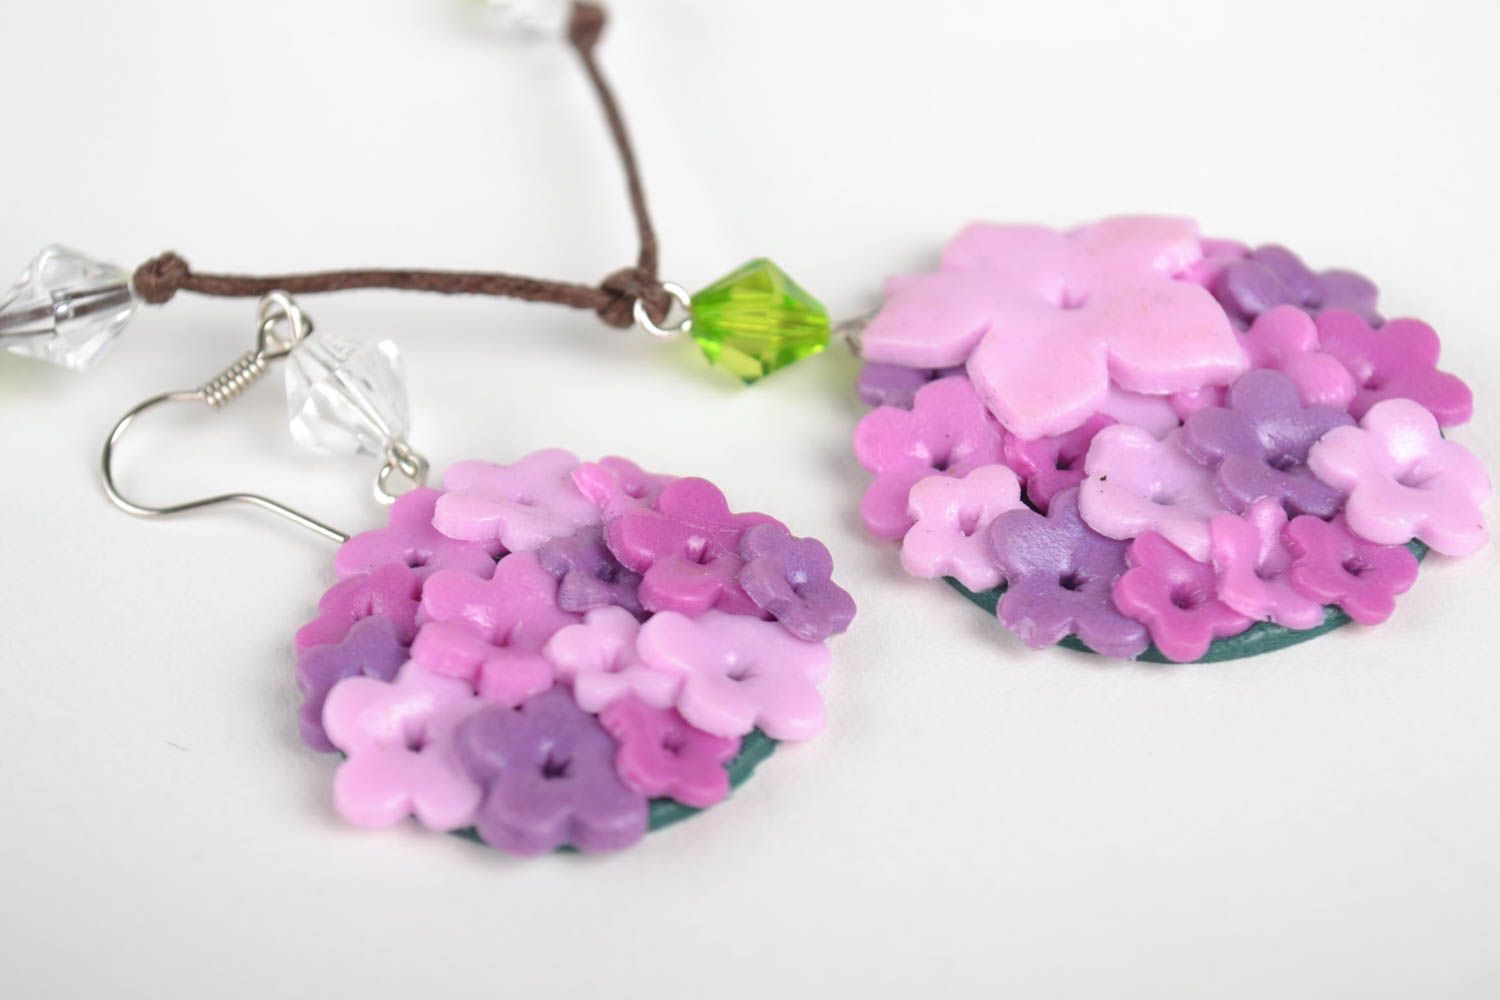 Flower jewelry handmade jewelry set dangling earrings pendant necklace gift idea photo 3